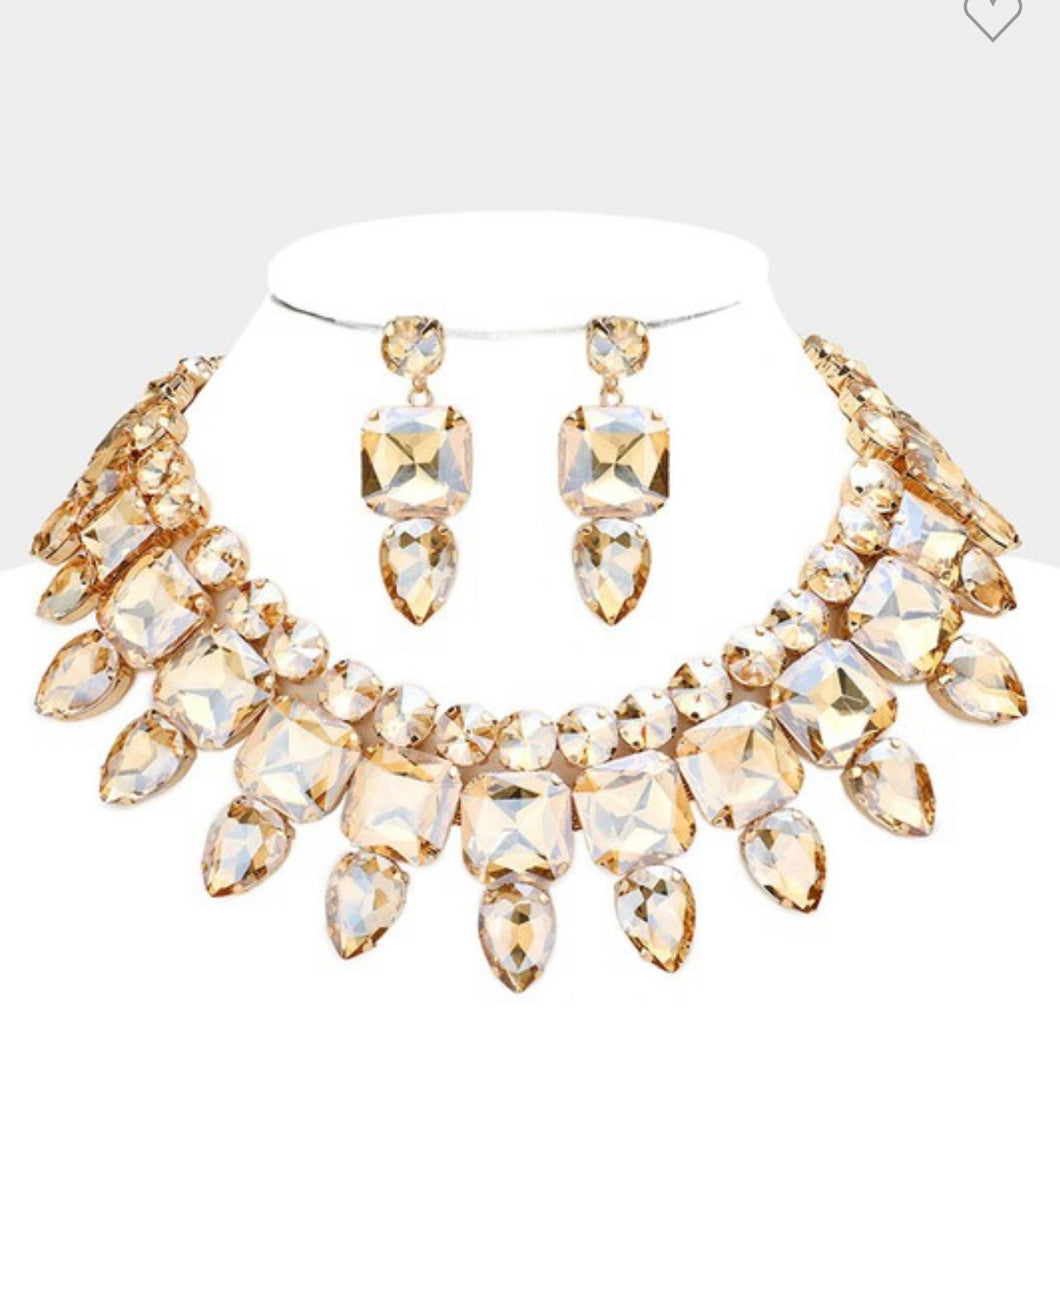 Dimond chocker necklace